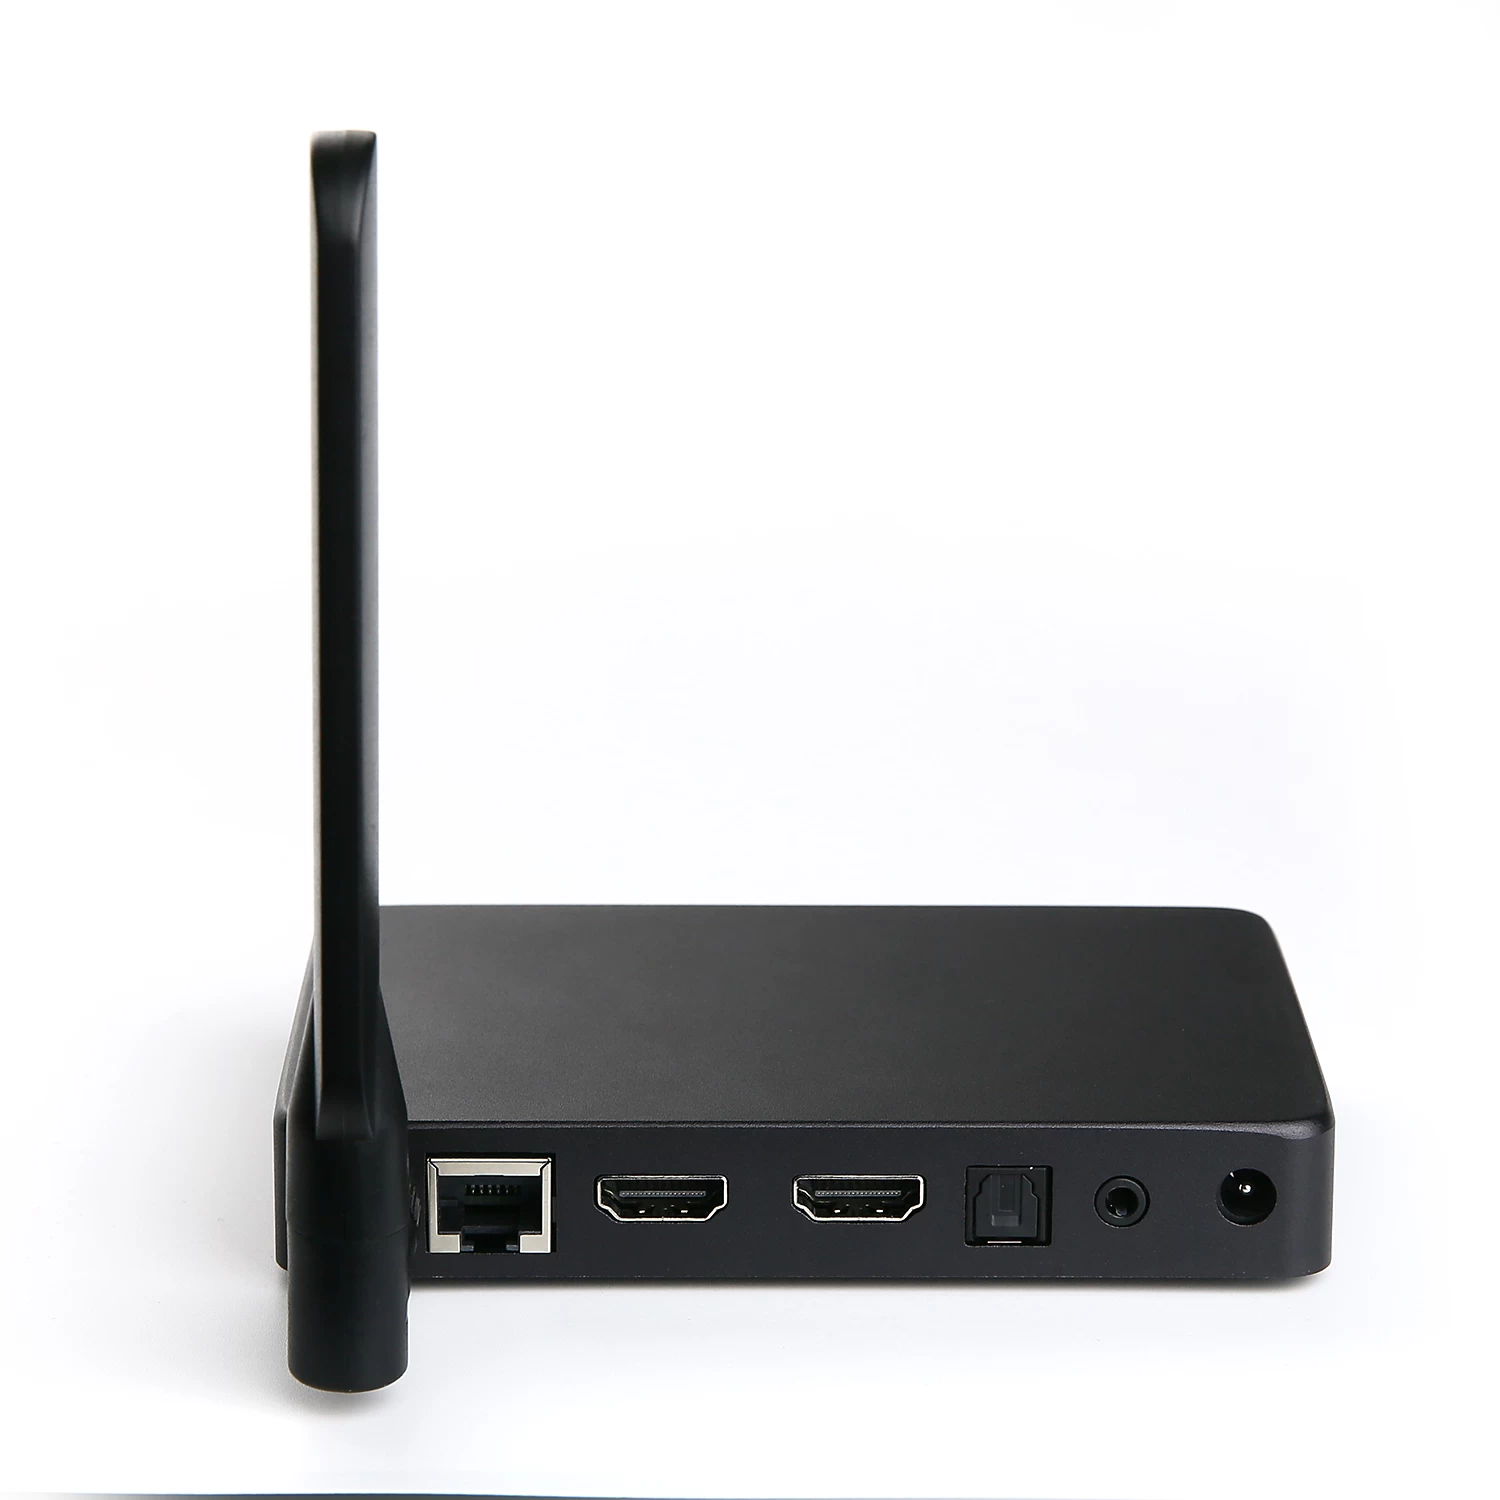 Realtek RTD1295 رباعي النواة ARM Cortex-A53 64-bit @ 2GHz Best Android TV Box HDMI iN Media Player Box